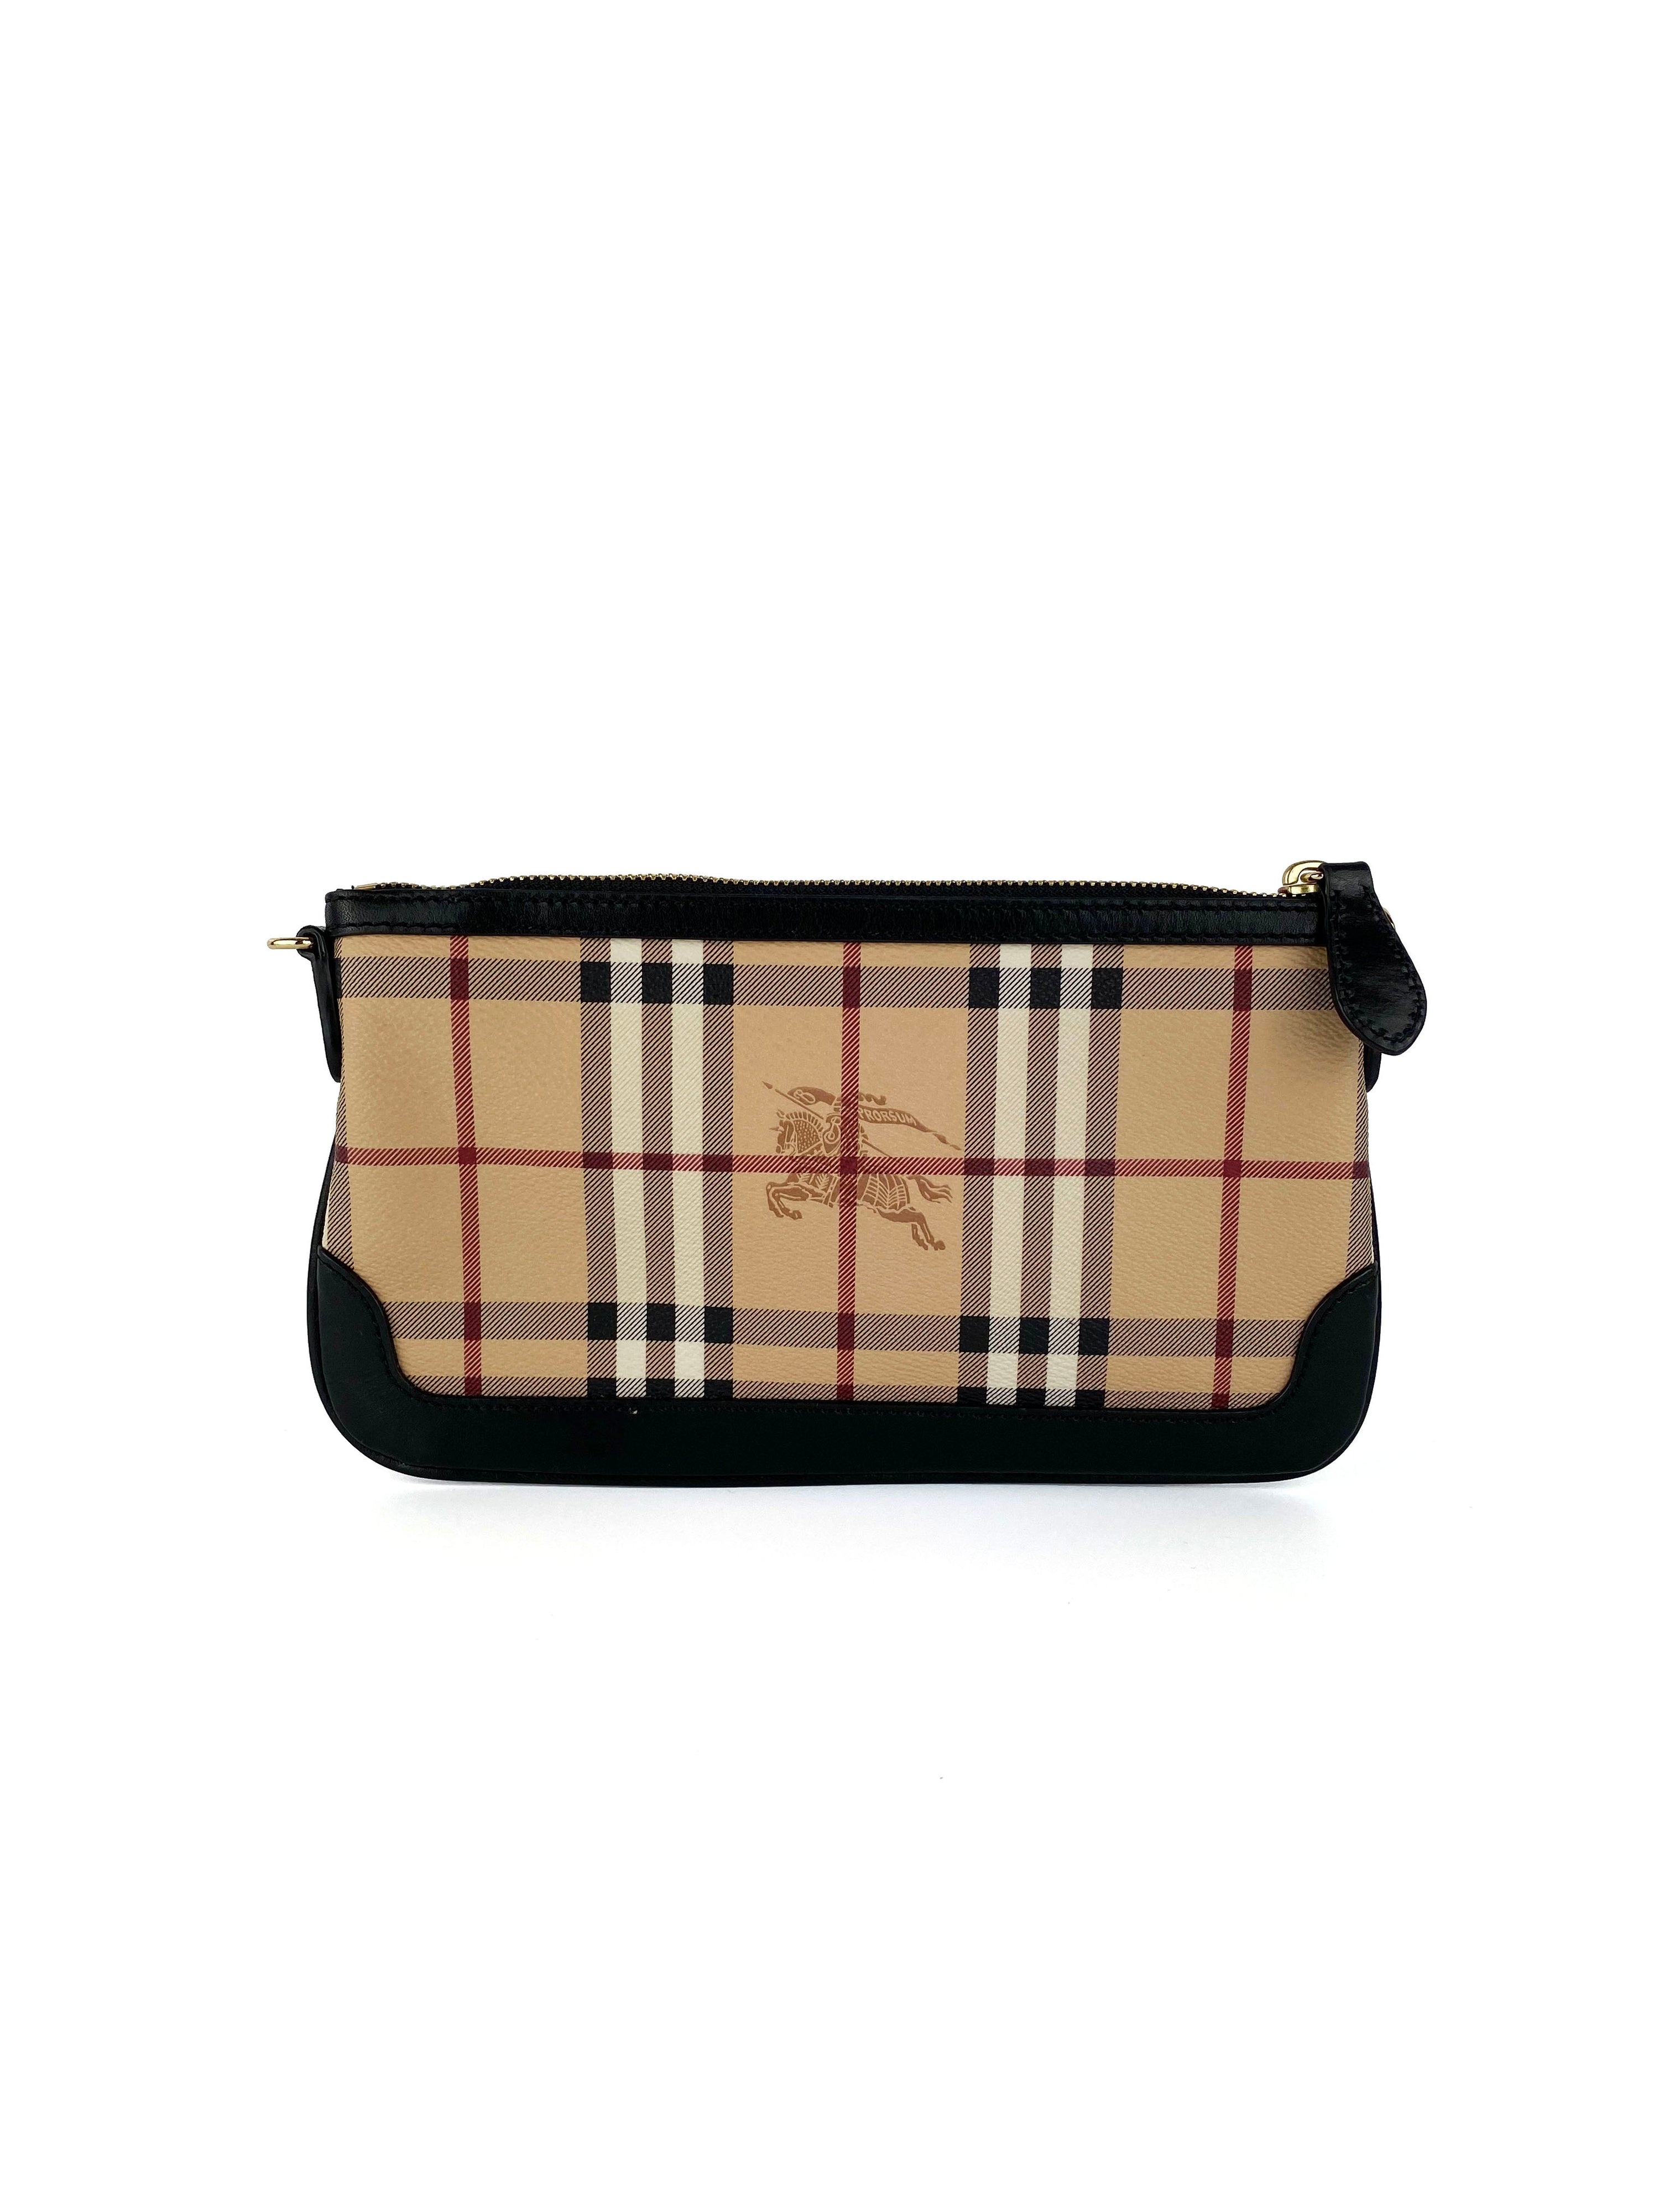 Burberry Haymarket Check Mini Shoulder Bag